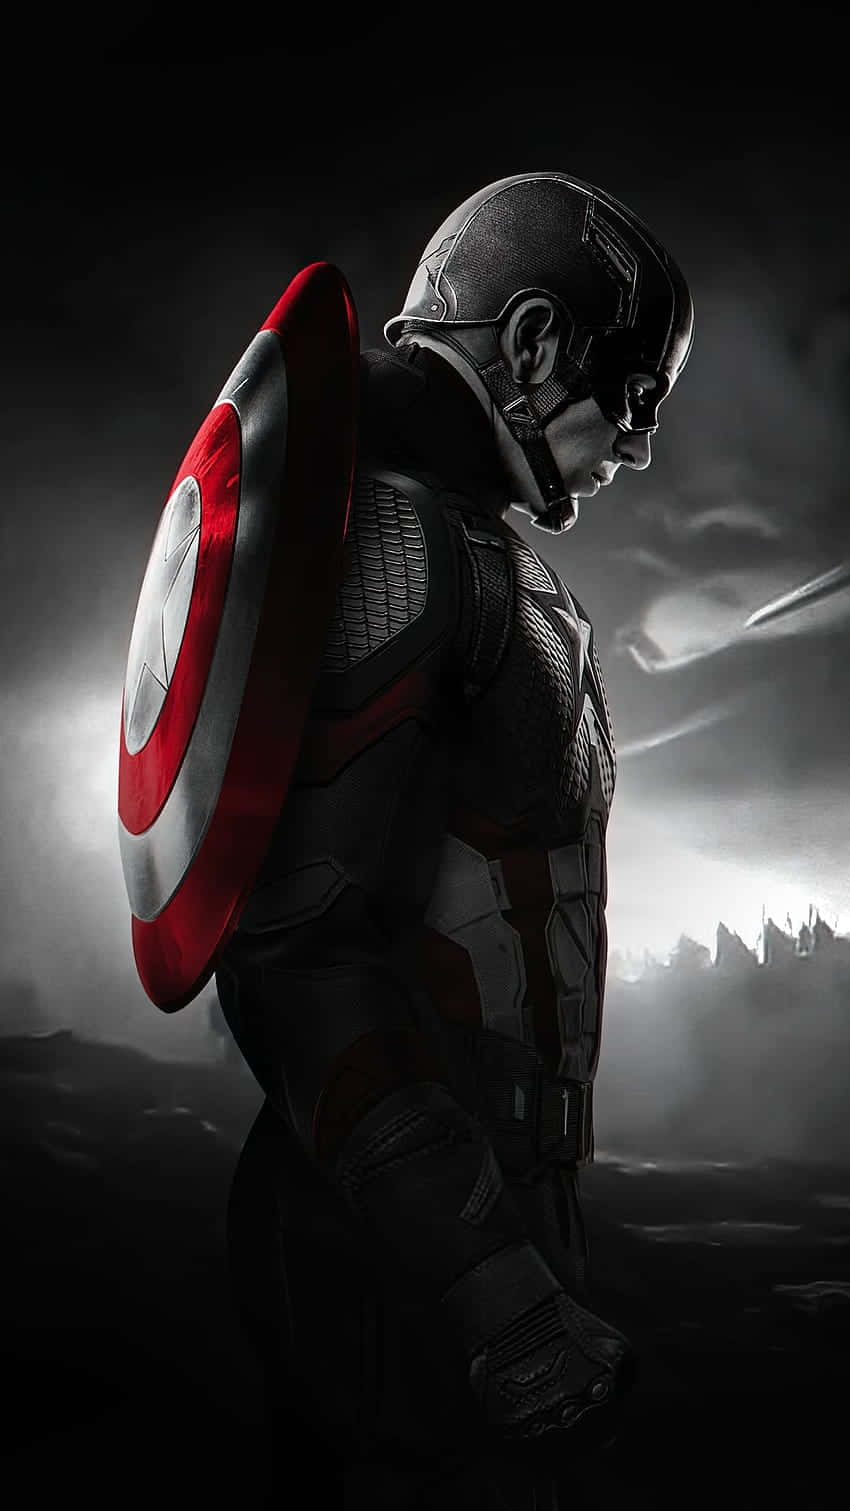 Captain America Side Profile With Shield Wallpaper